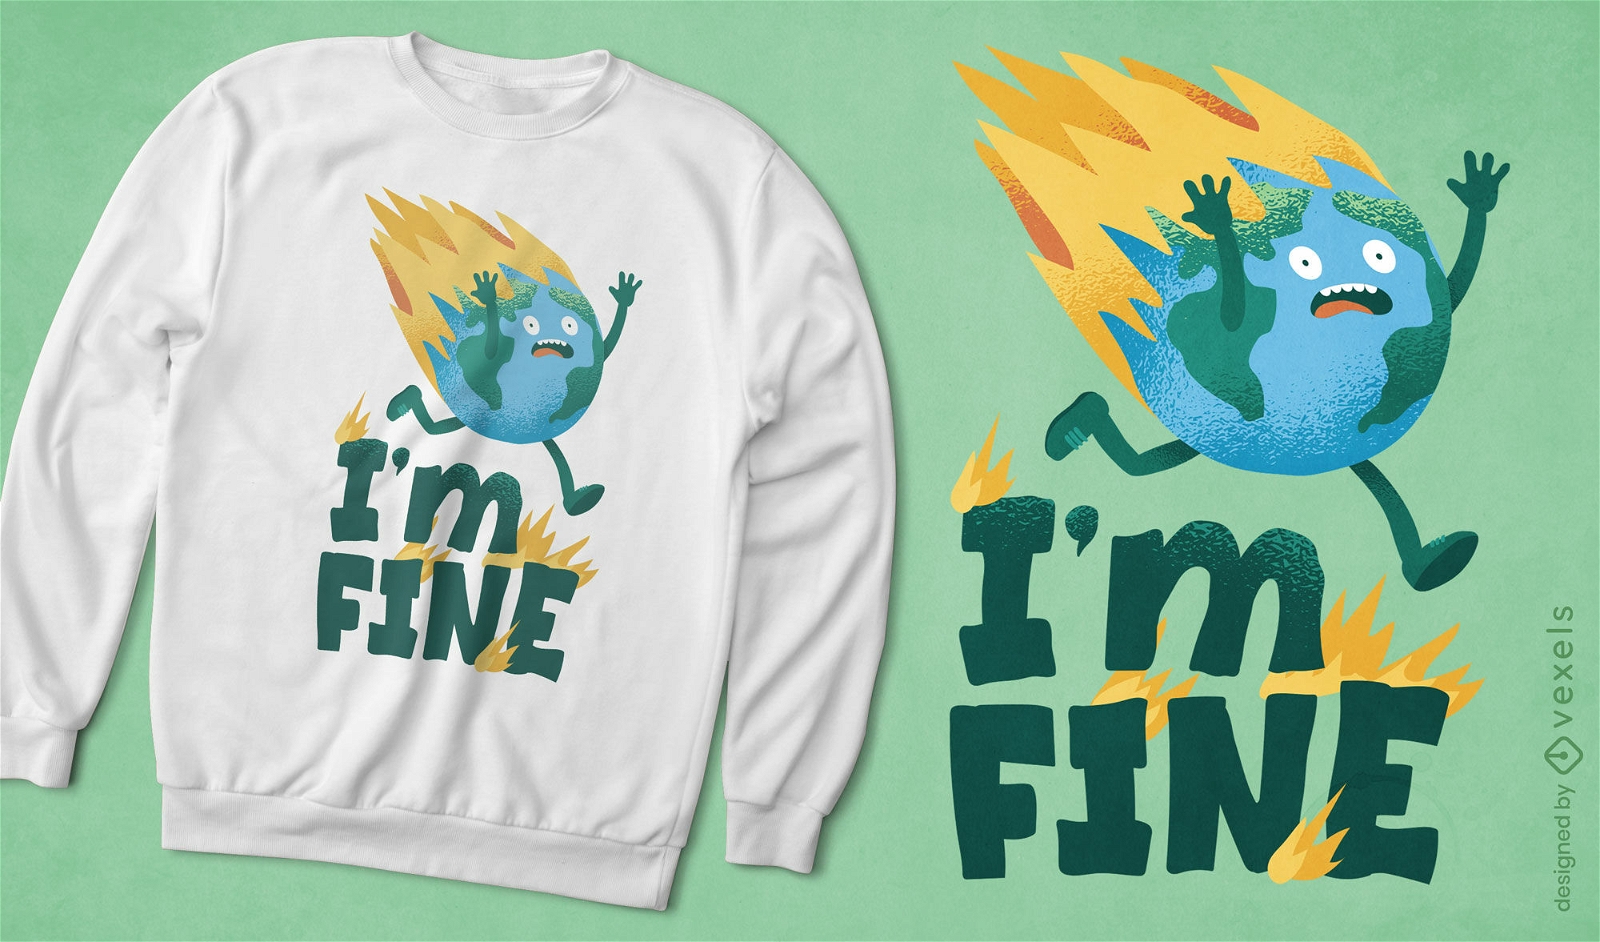 I'm fine Earth Day funny t-shirt design